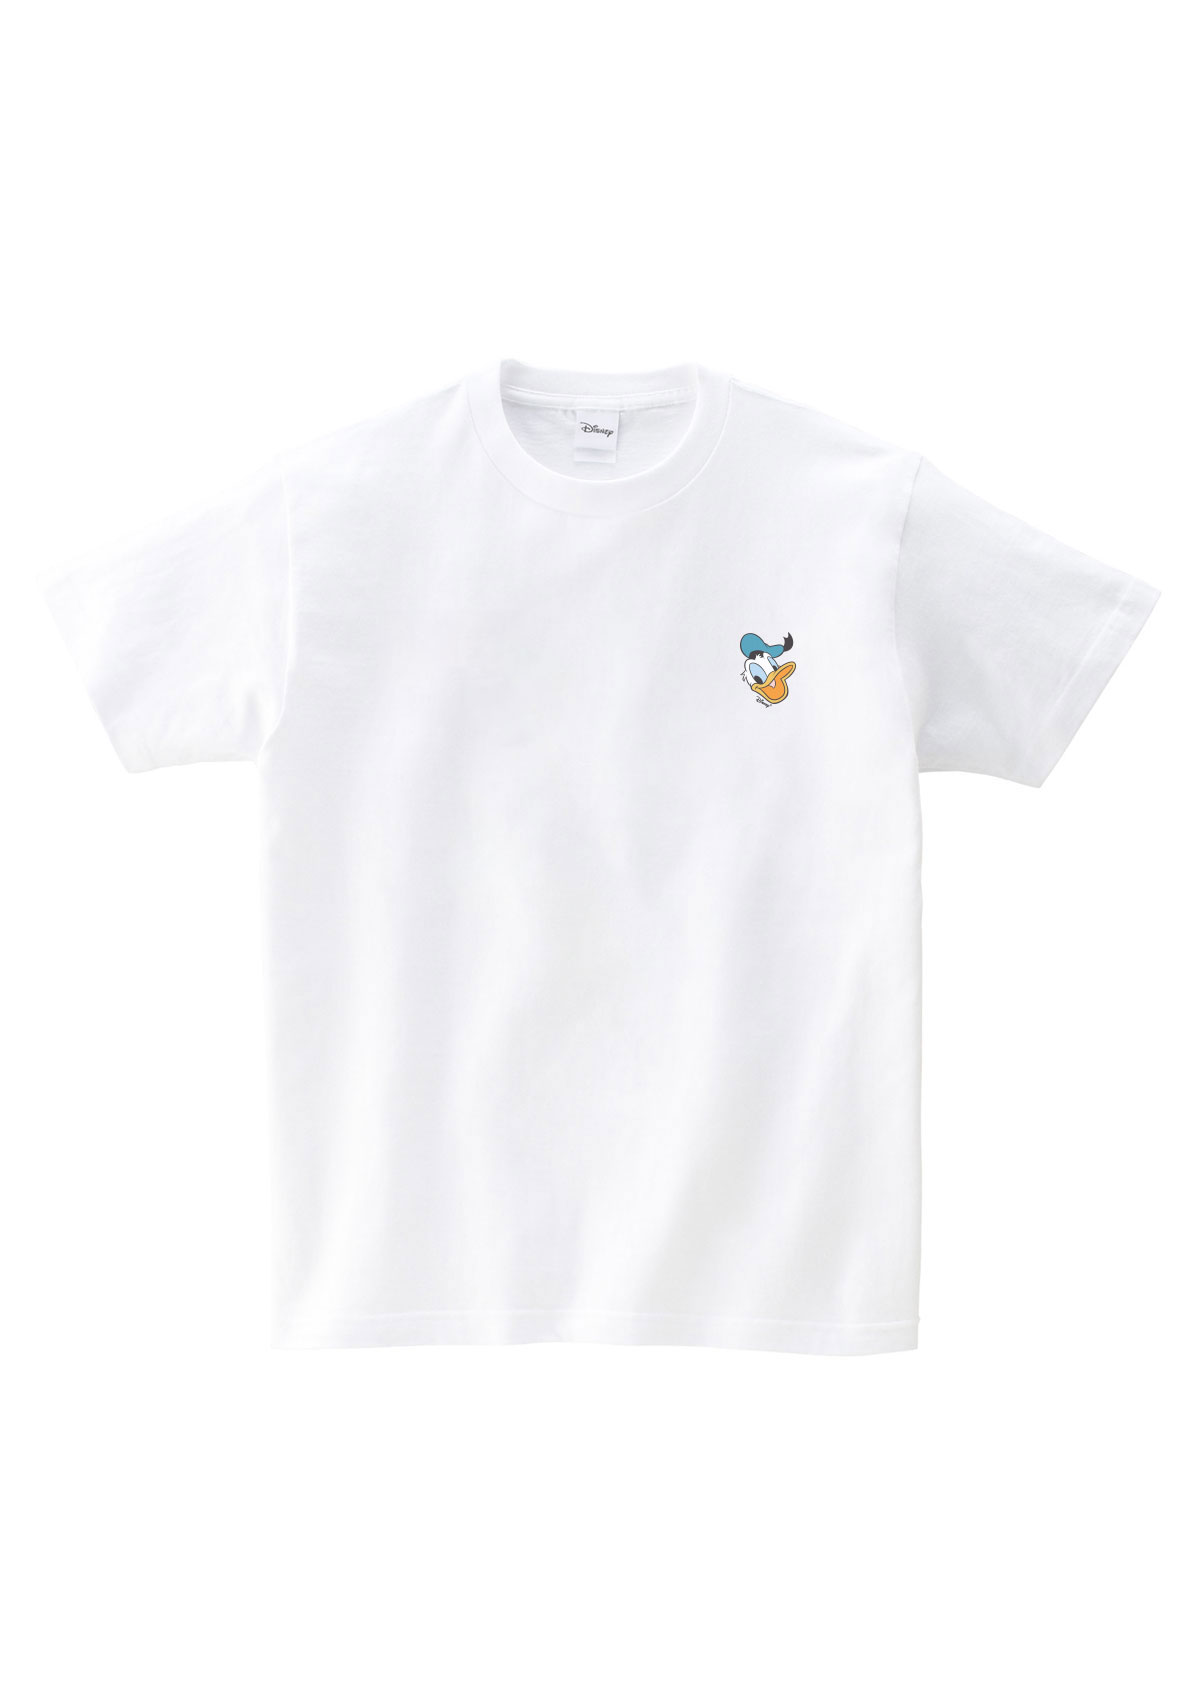 ORI Smile Duck T-Shirt (White)